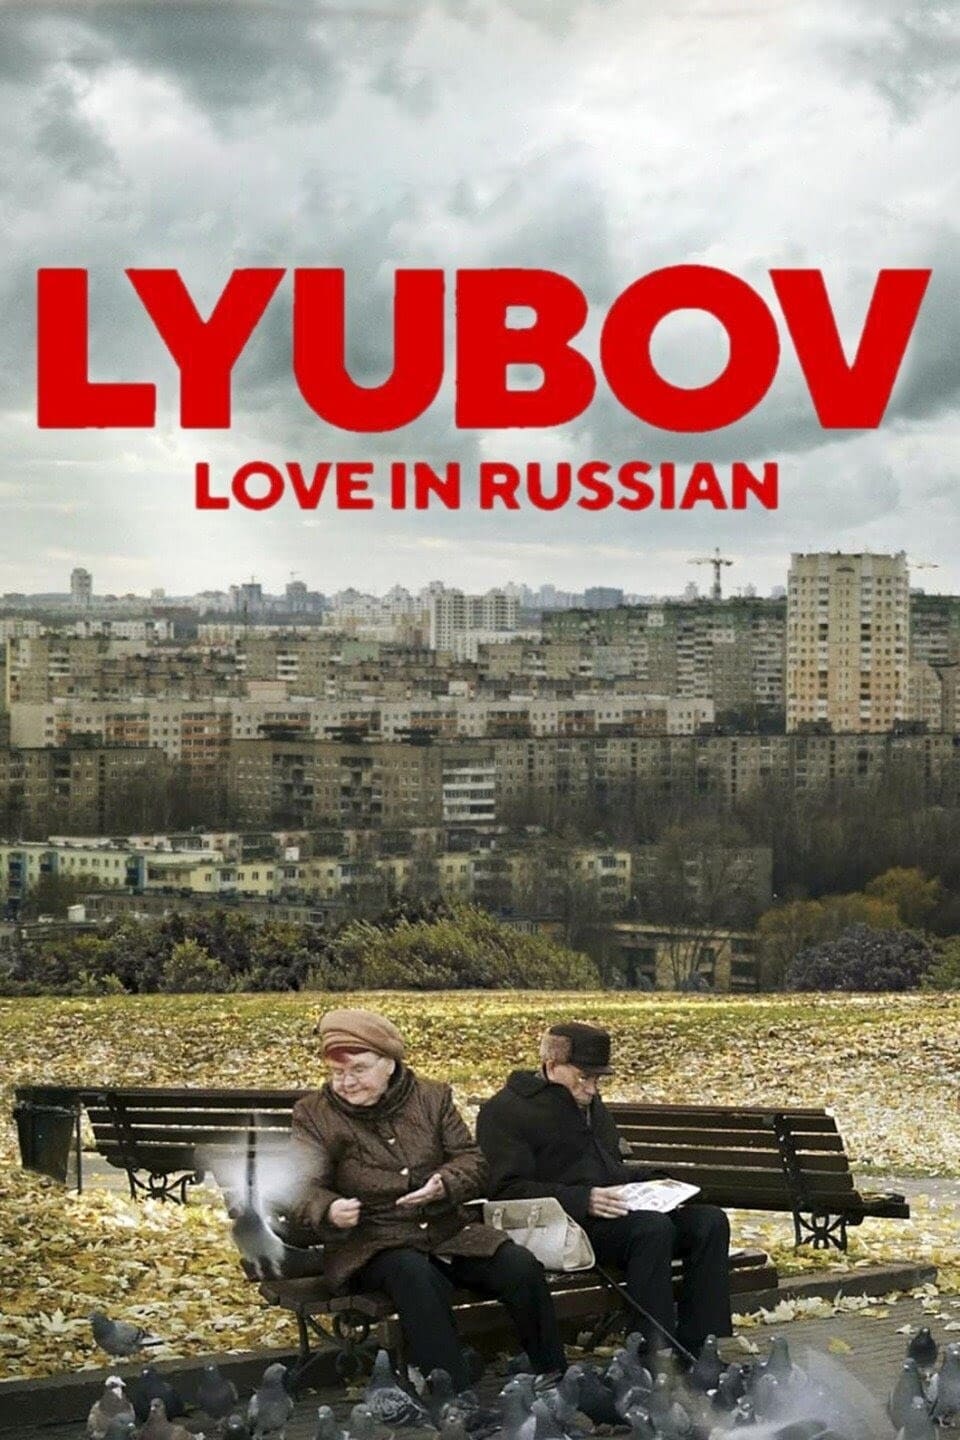 Lyubov: Love in Russian